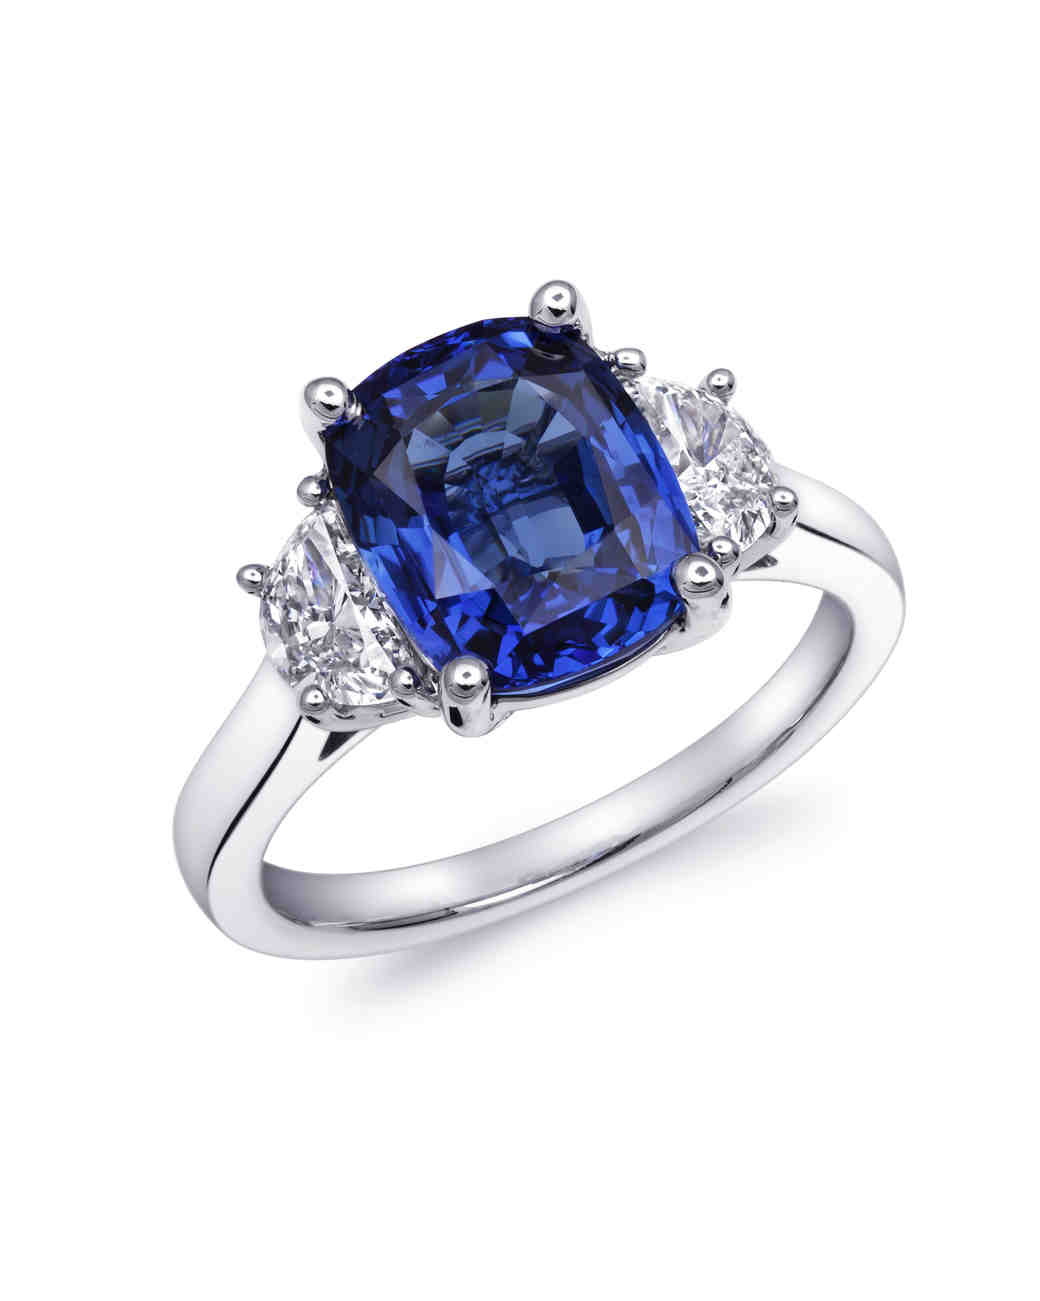 Cushion-Cut Diamond Engagement Rings | Martha Stewart Weddings